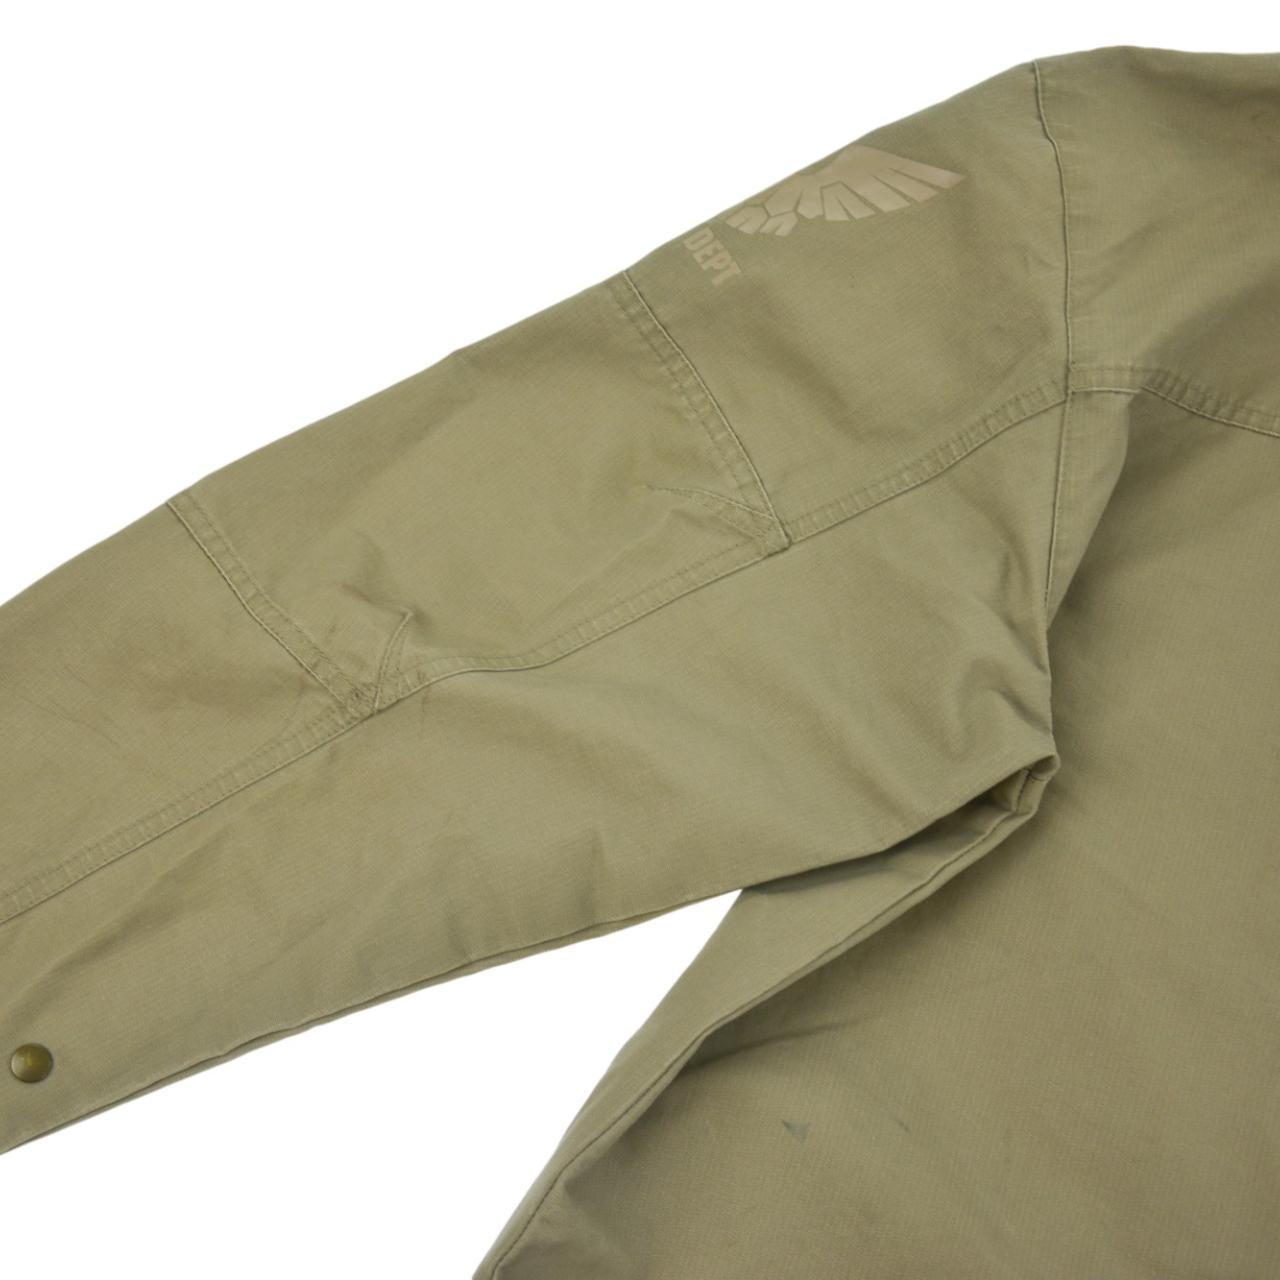 Vintage Nike Multi Pockey Jacket Size XL - Known Source